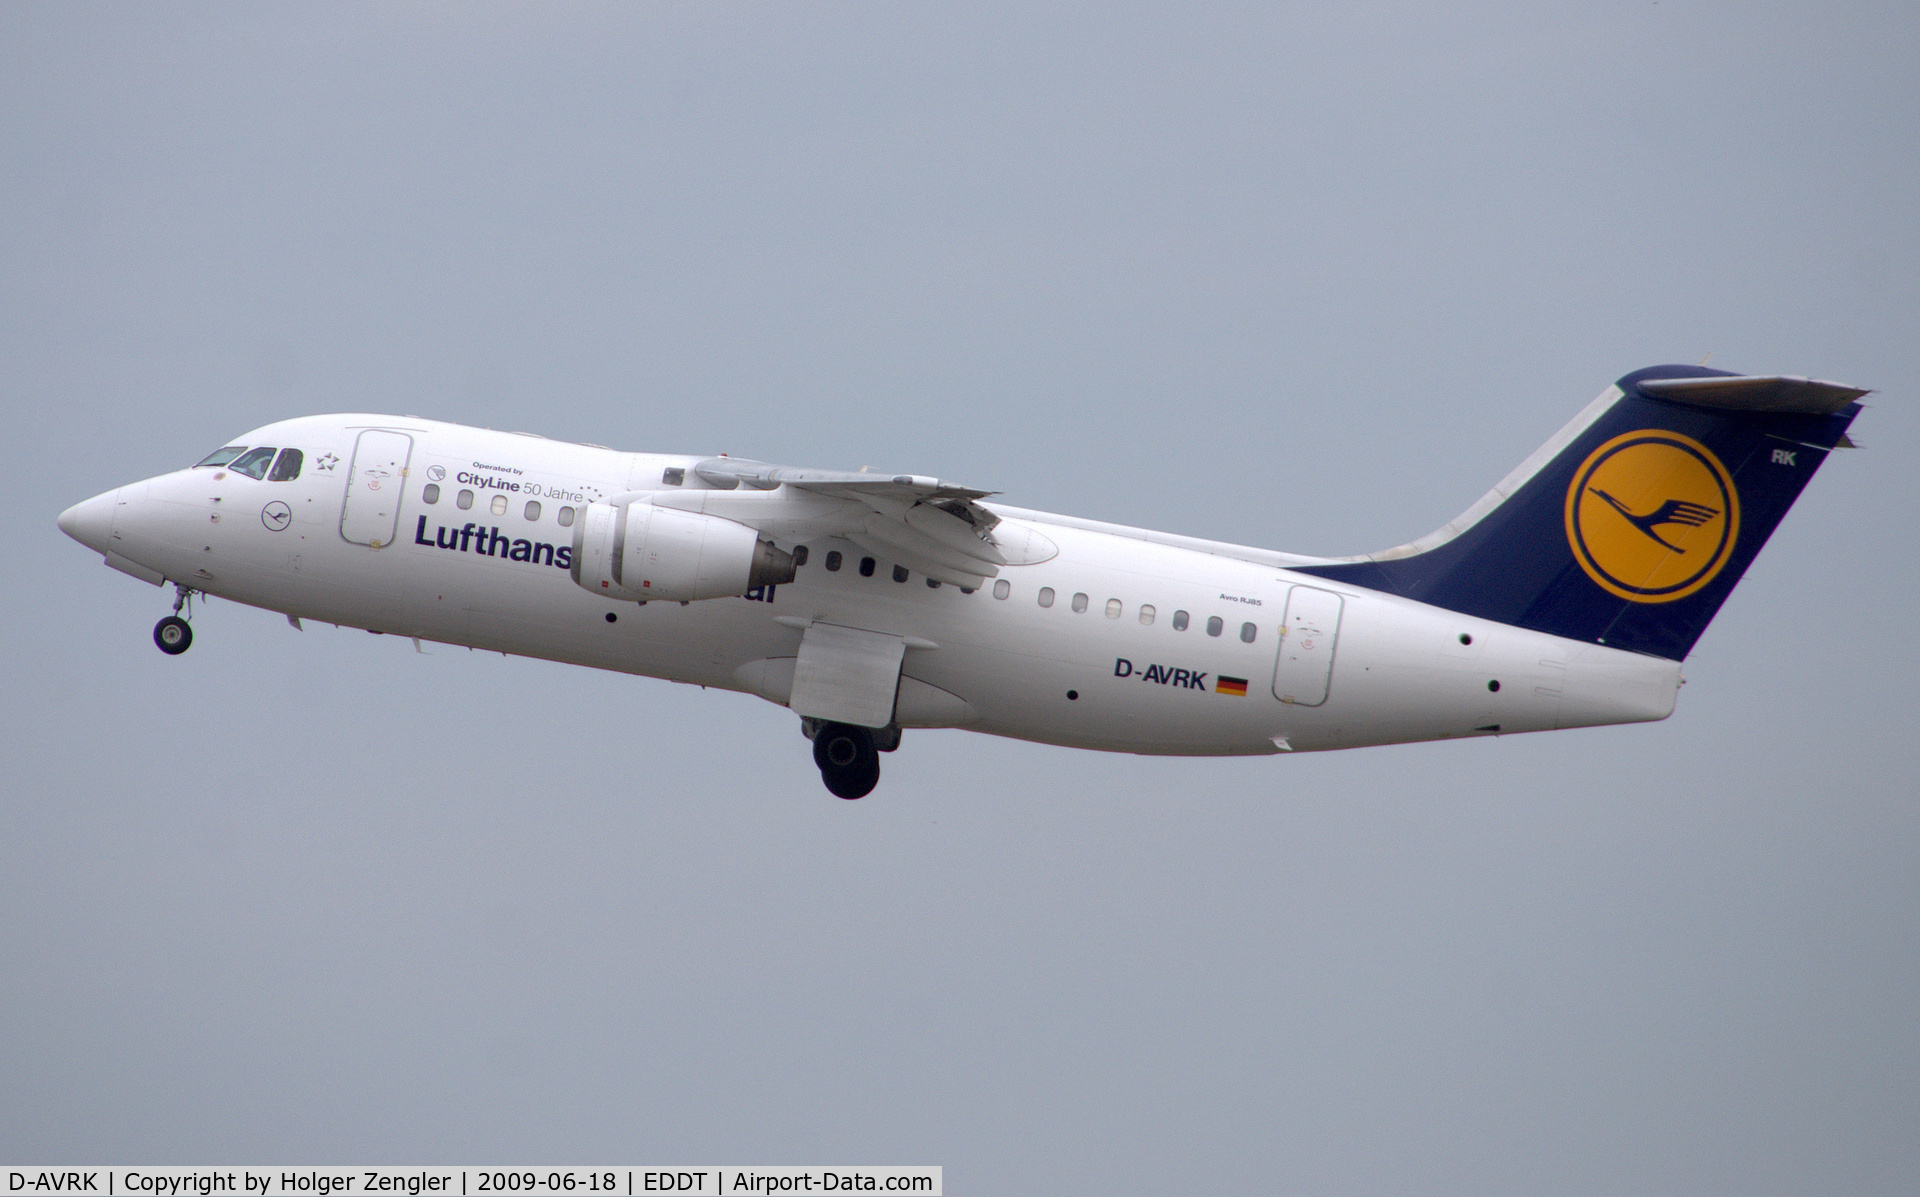 D-AVRK, 1996 British Aerospace Avro 146-RJ85 C/N E.2278, Flight LH 332 to Nuremburg has just left TXL